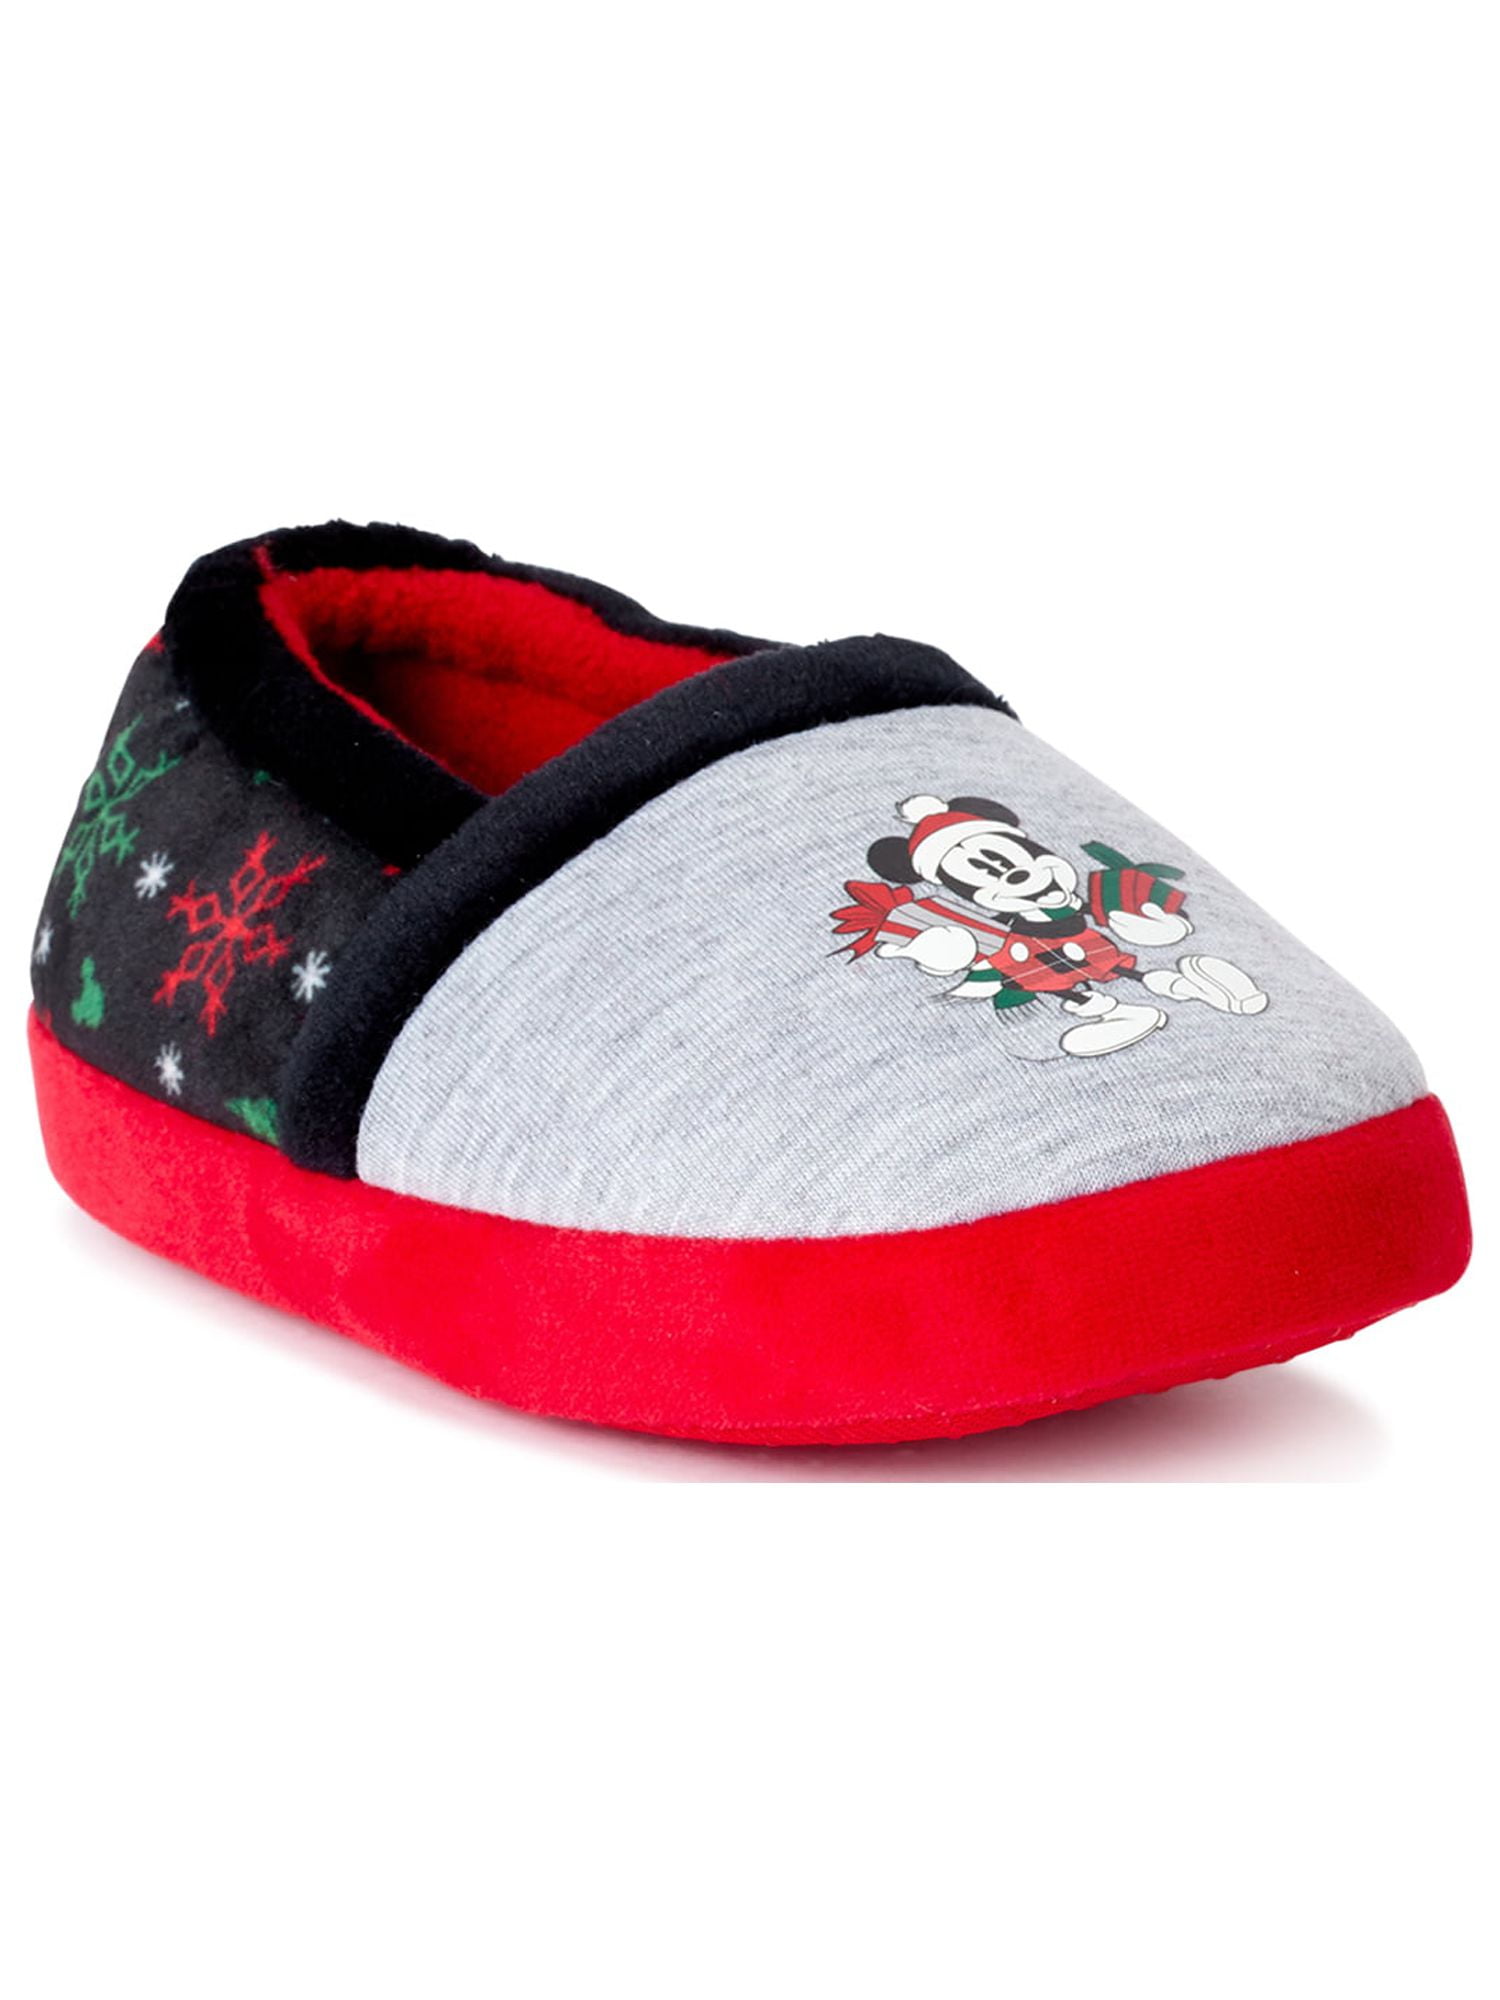 HALLMARK MAXINE SHOEBOX MAGNET SET Christmas Bunny Slippers | eBay